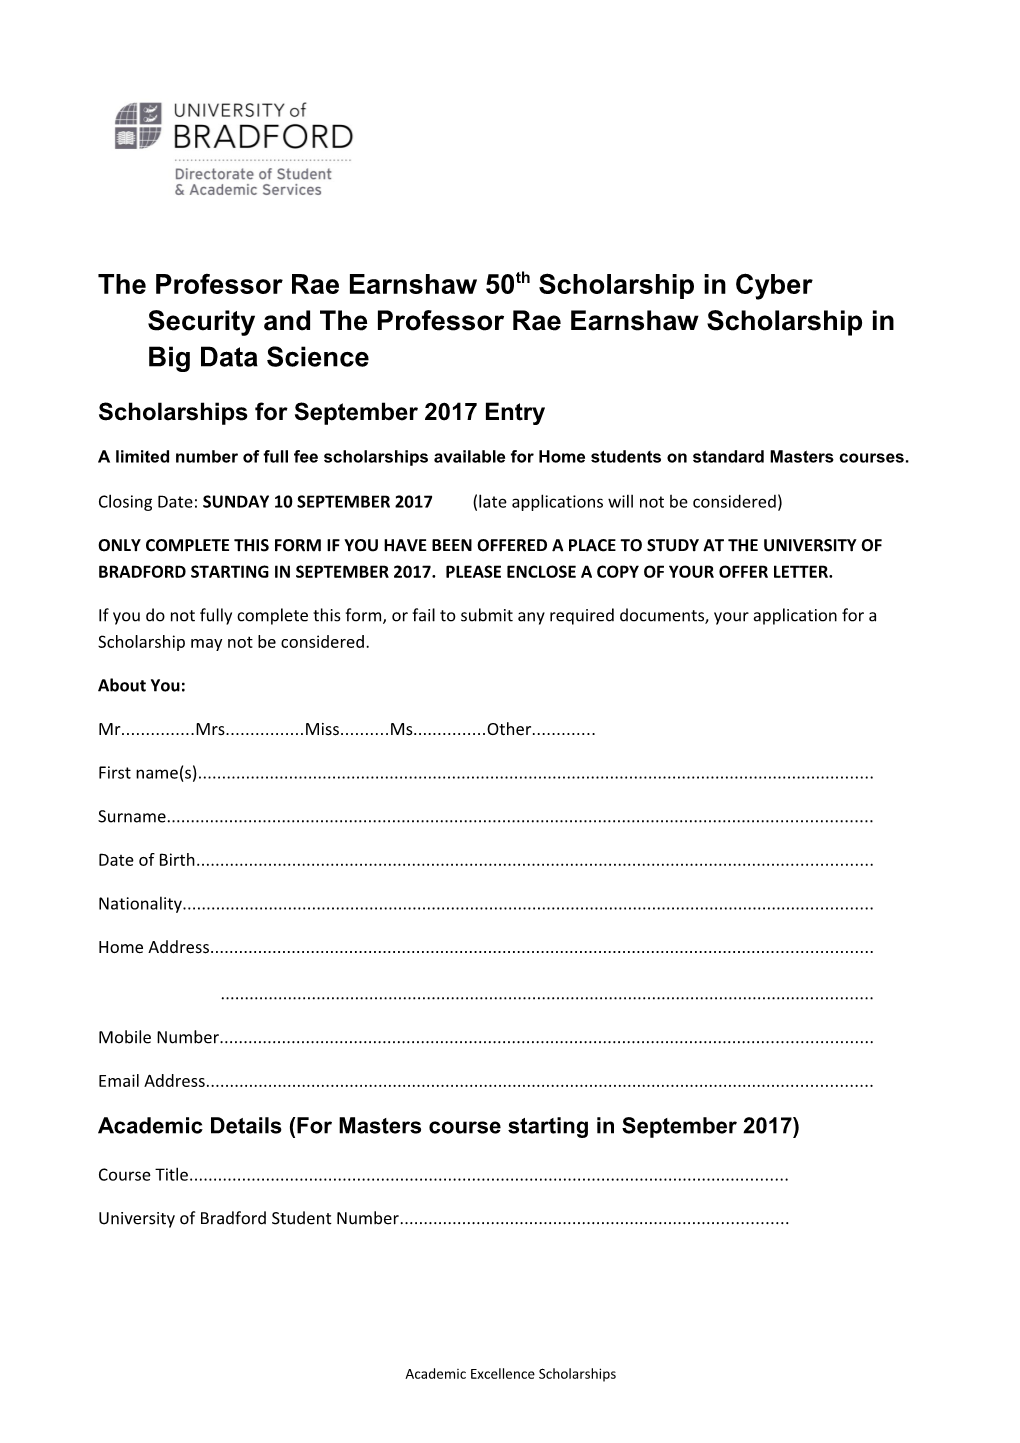 The Professor Rae Earnshaw 50Th Scholarship in Cyber Security and the Professor Rae Earnshaw